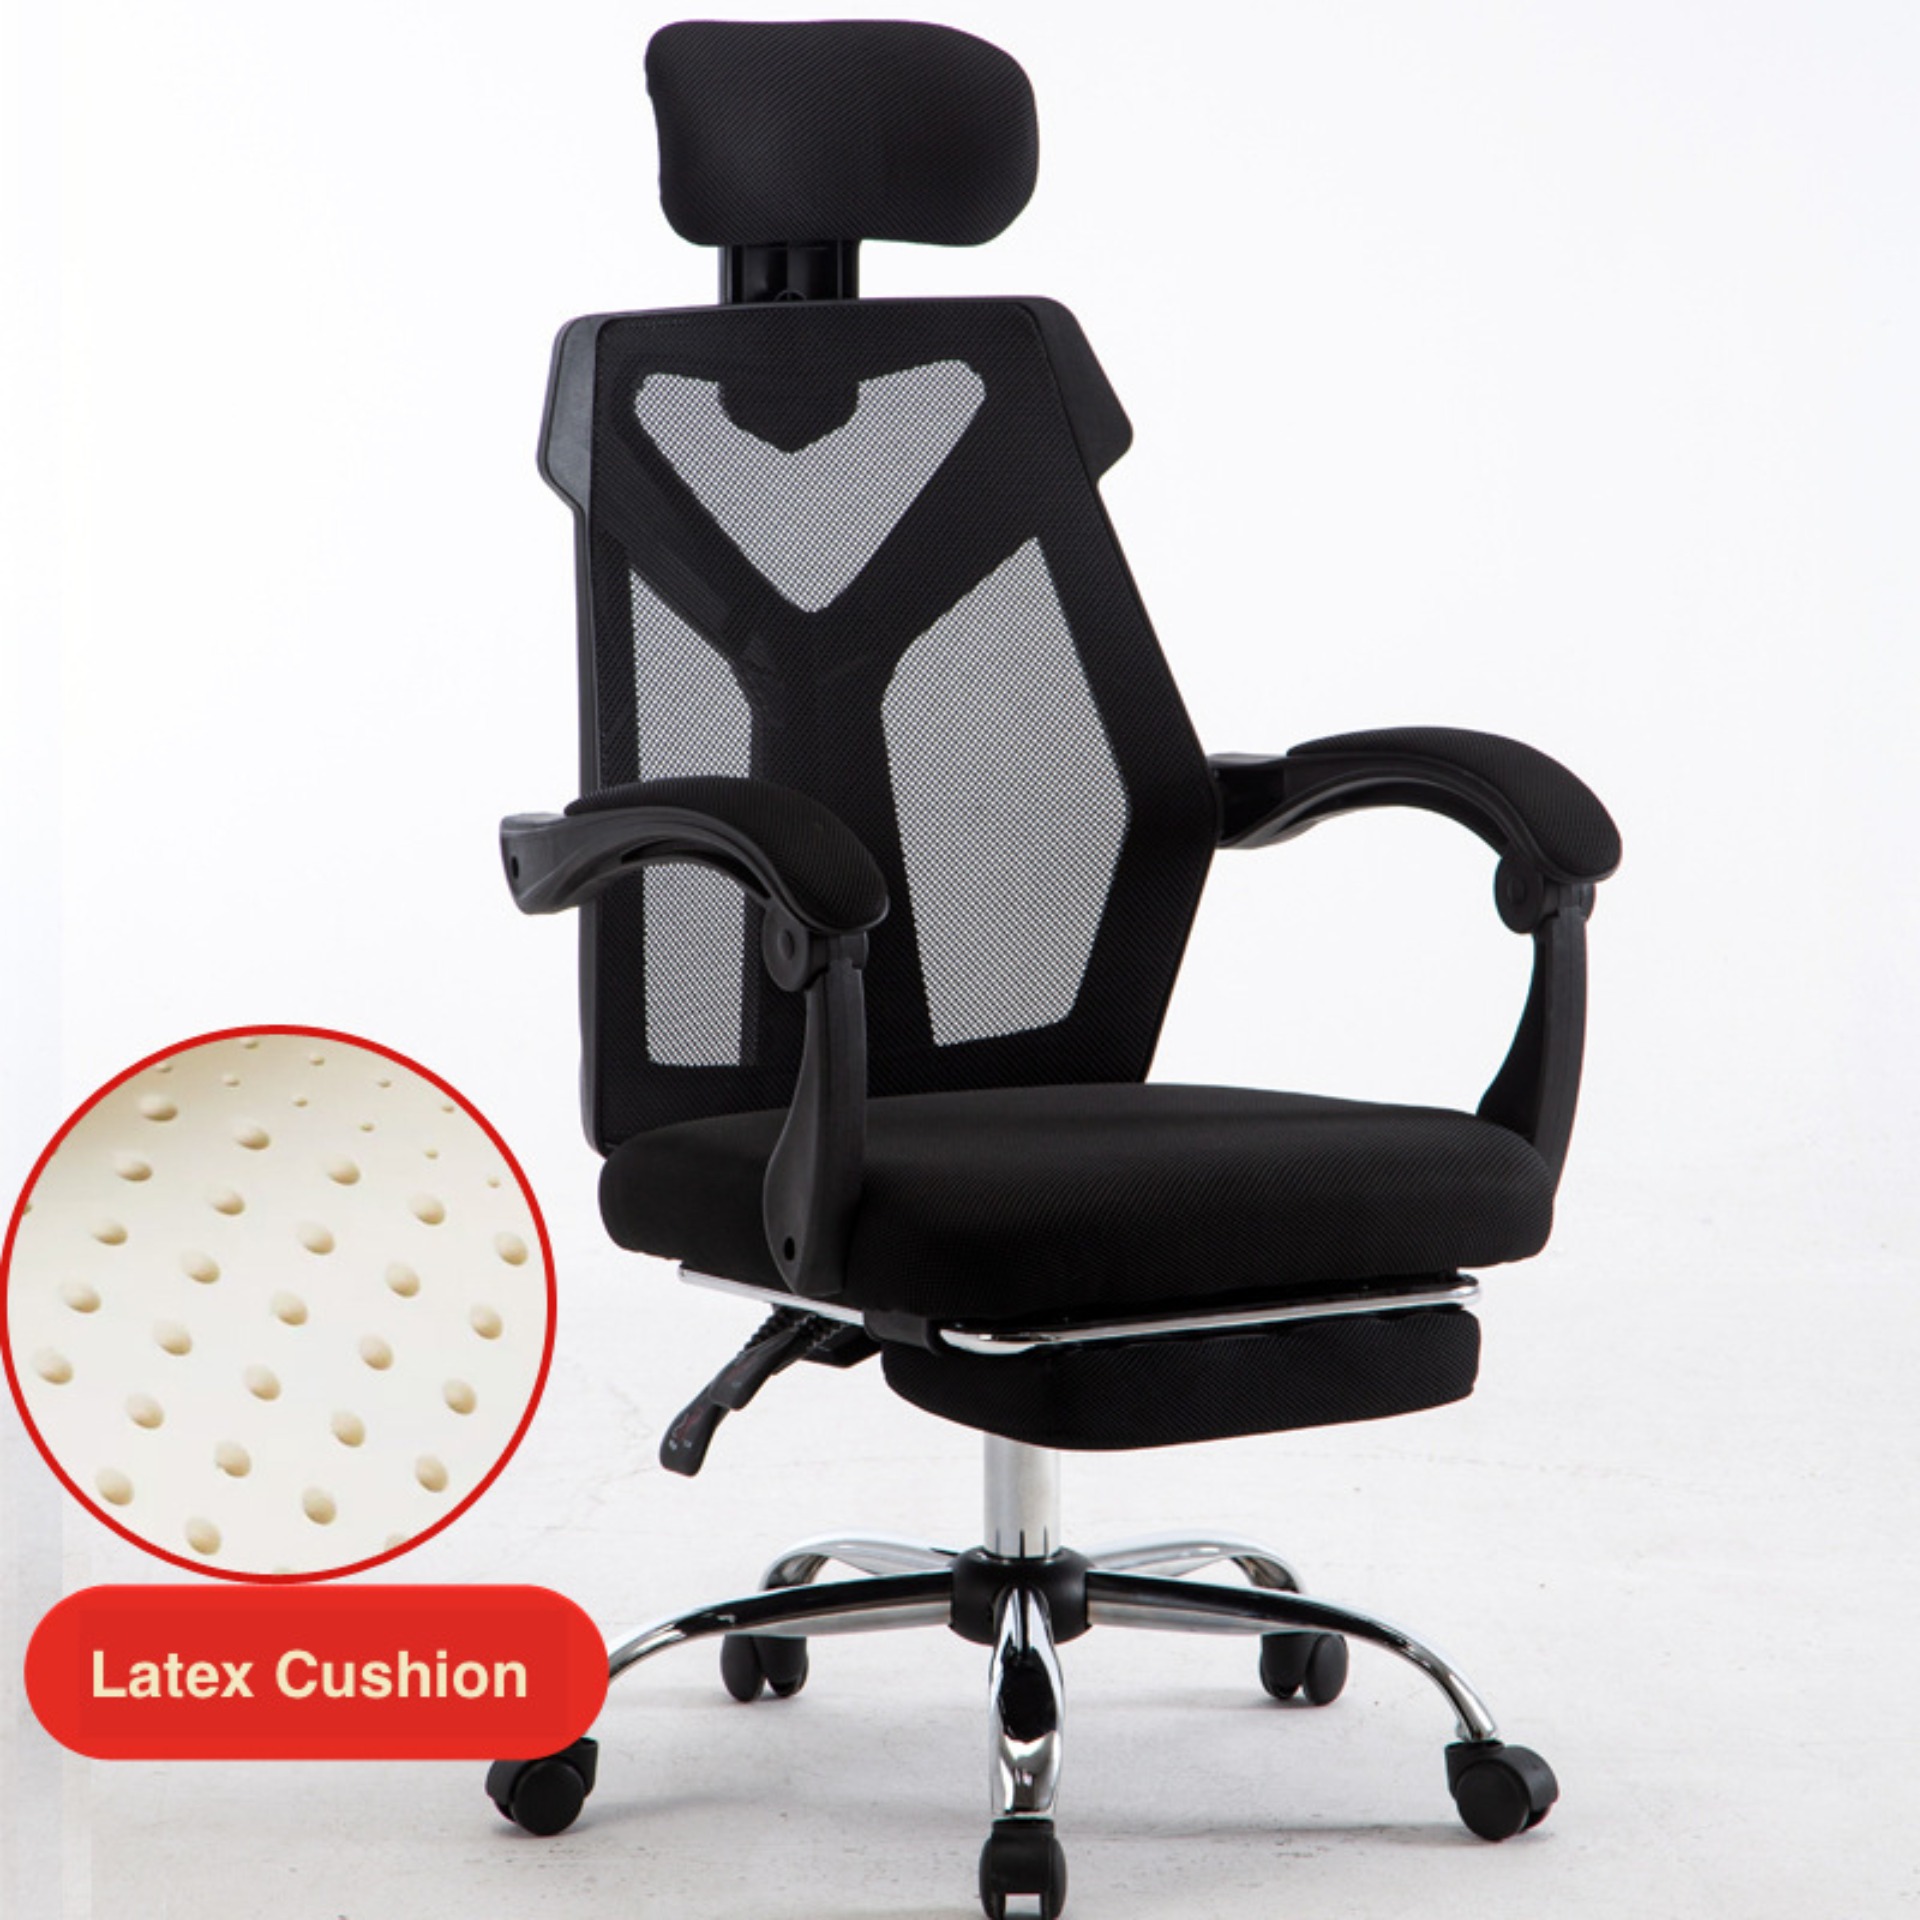 Ergonomic High Back Full Mesh Premium Office Chair With Latex Cushion Diy Installation Required Computer Chair Gaming Chair Ergonomic Chair With Foot Stool Lazada Singapore